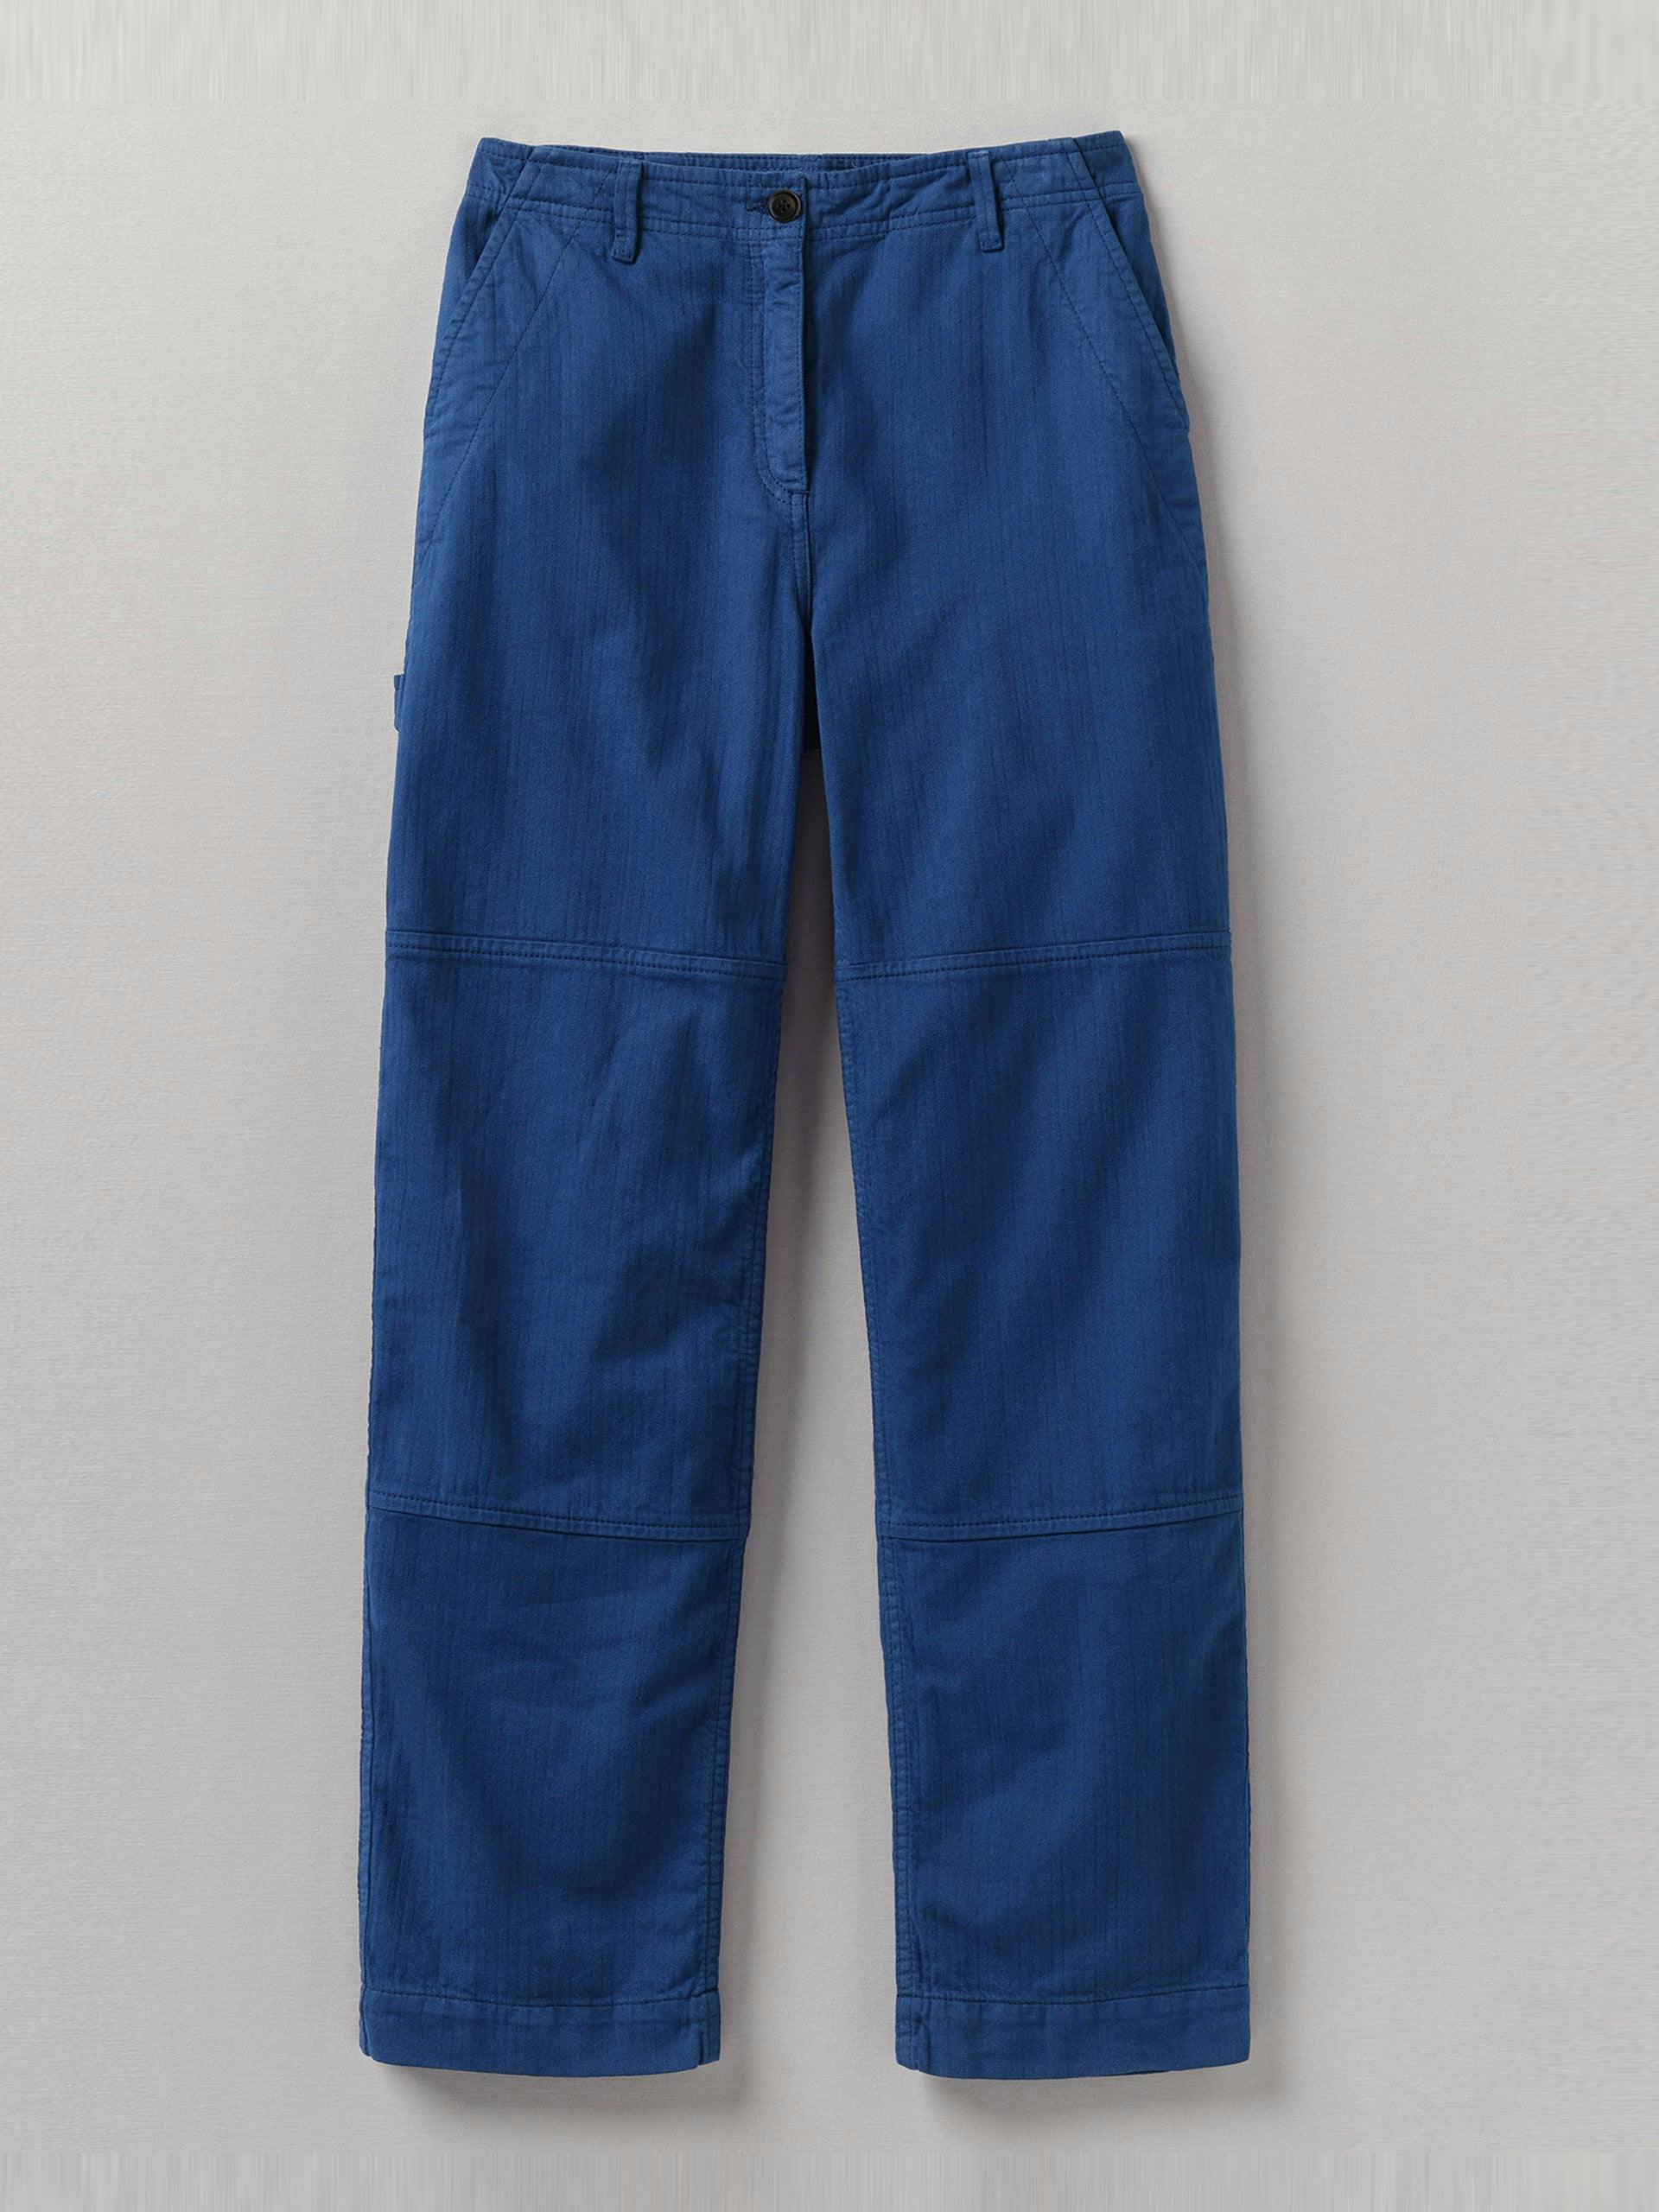 Cotton herringbone workwear trousers